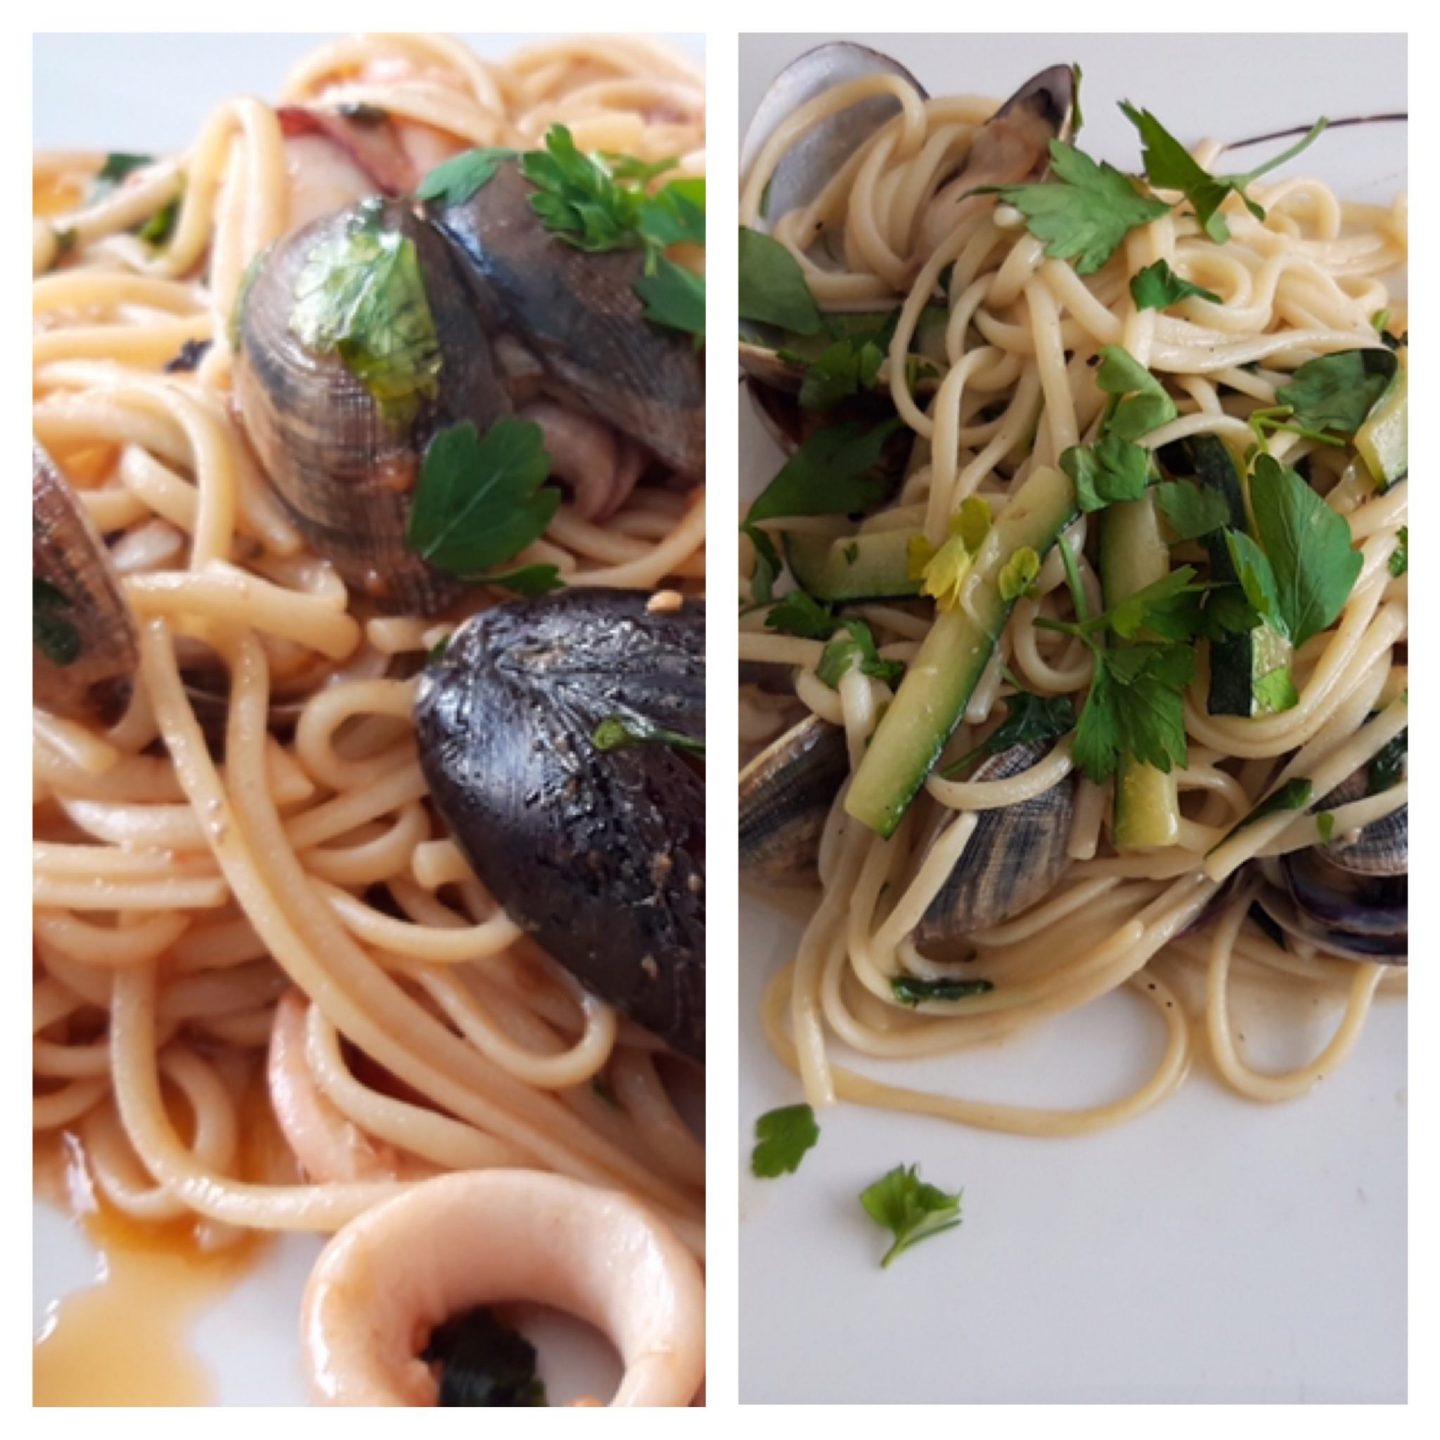 Erfahrung Kritik Bewertung Spaghetti mit Meeresfrüchten Restaurant Almare Ciutat Jardi Palma de Mallorca Foodblog Sternestulle